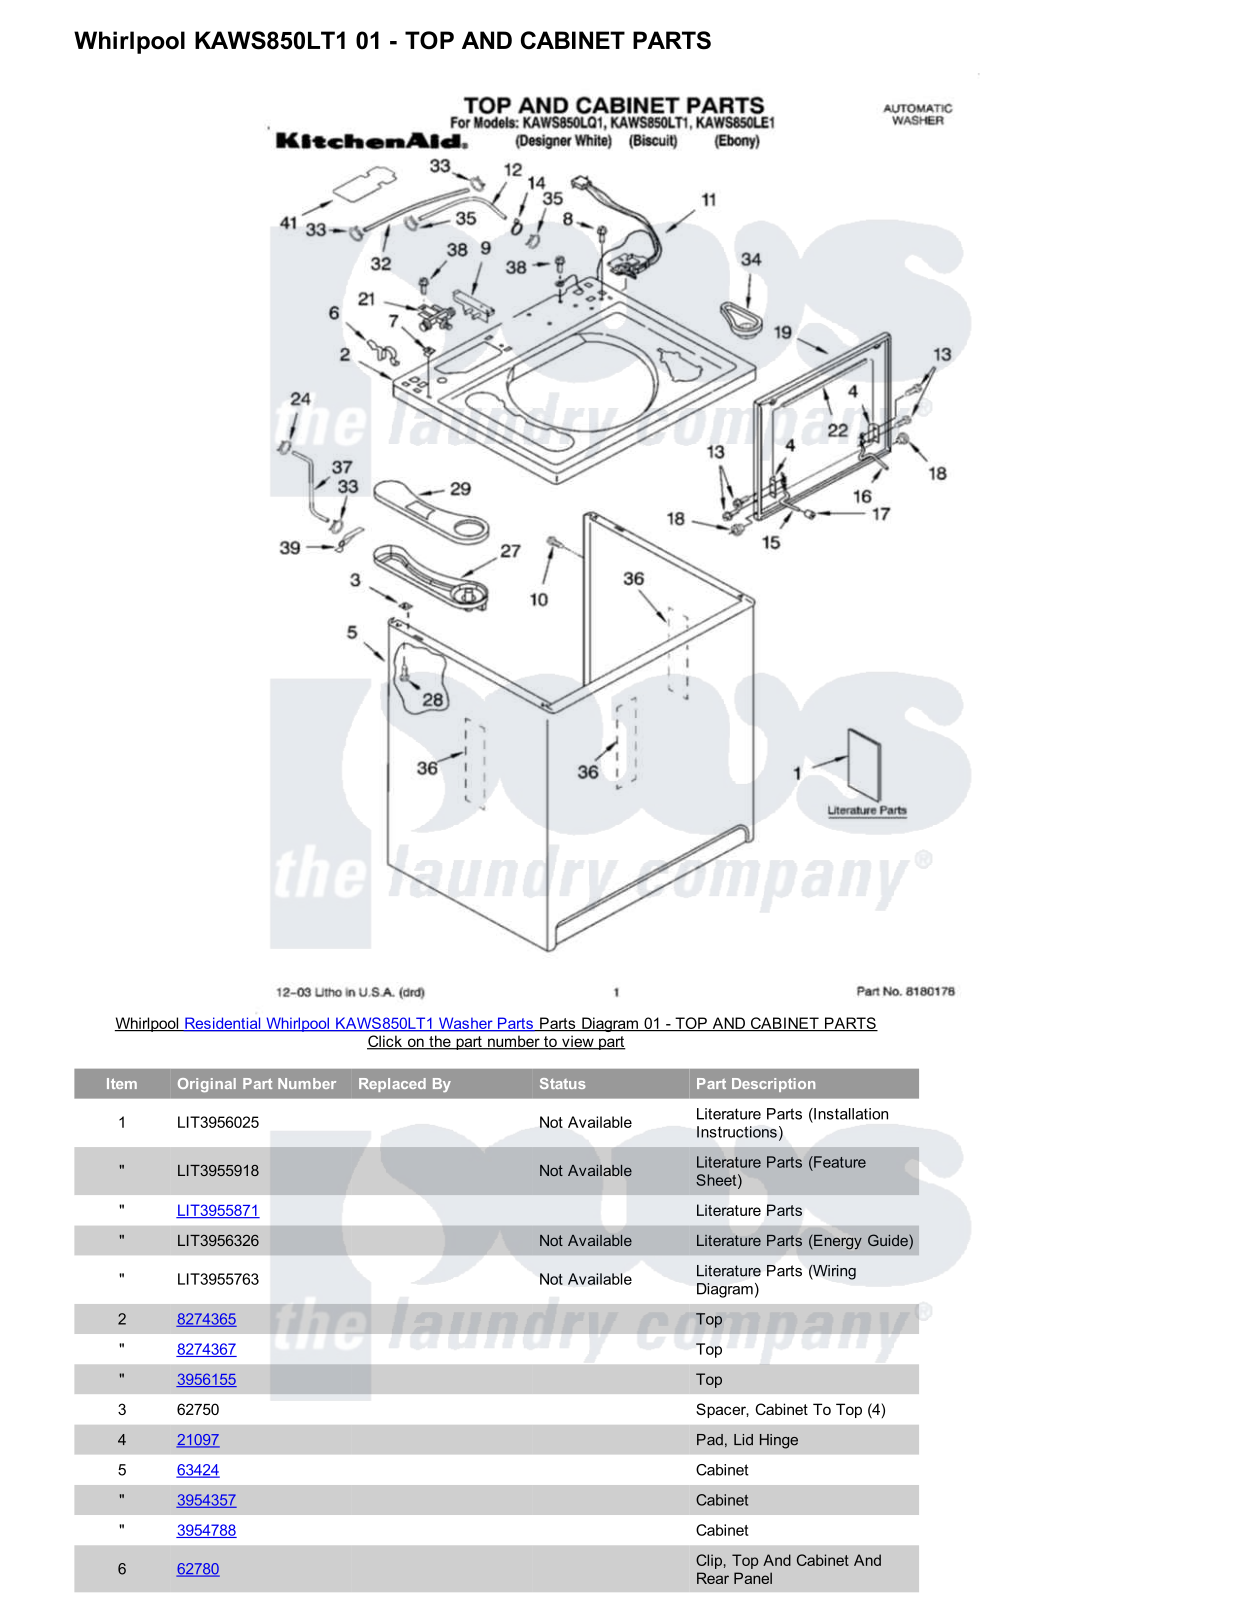 Whirlpool KAWS850LT1 Parts Diagram